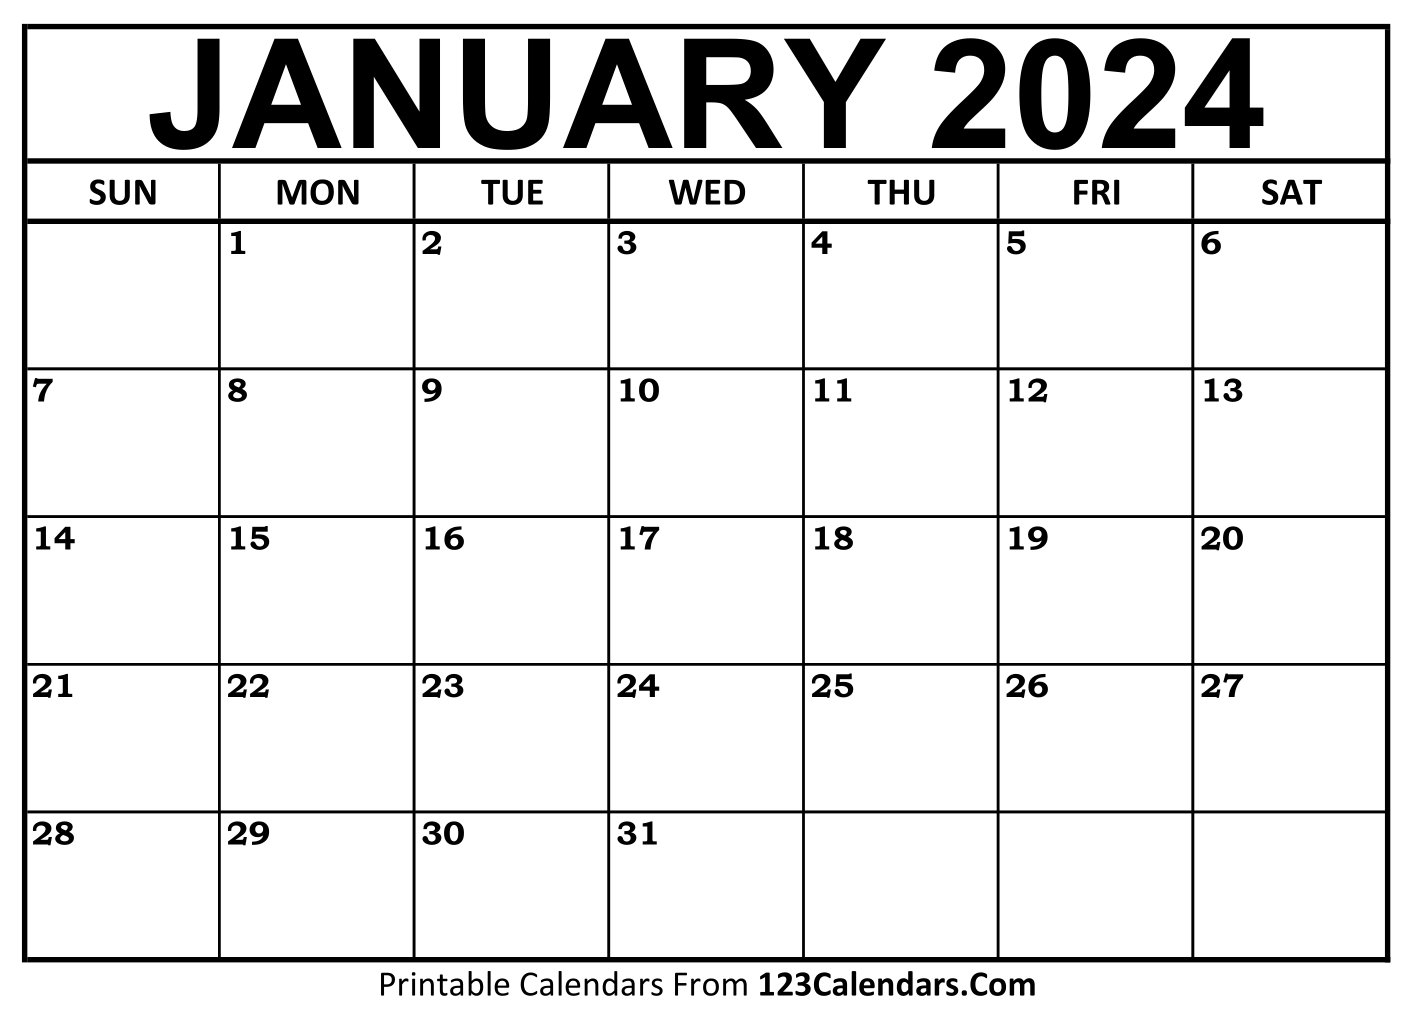 Printable January 2024 Calendar Templates - 123Calendars for Free Printable January Calendar 2024